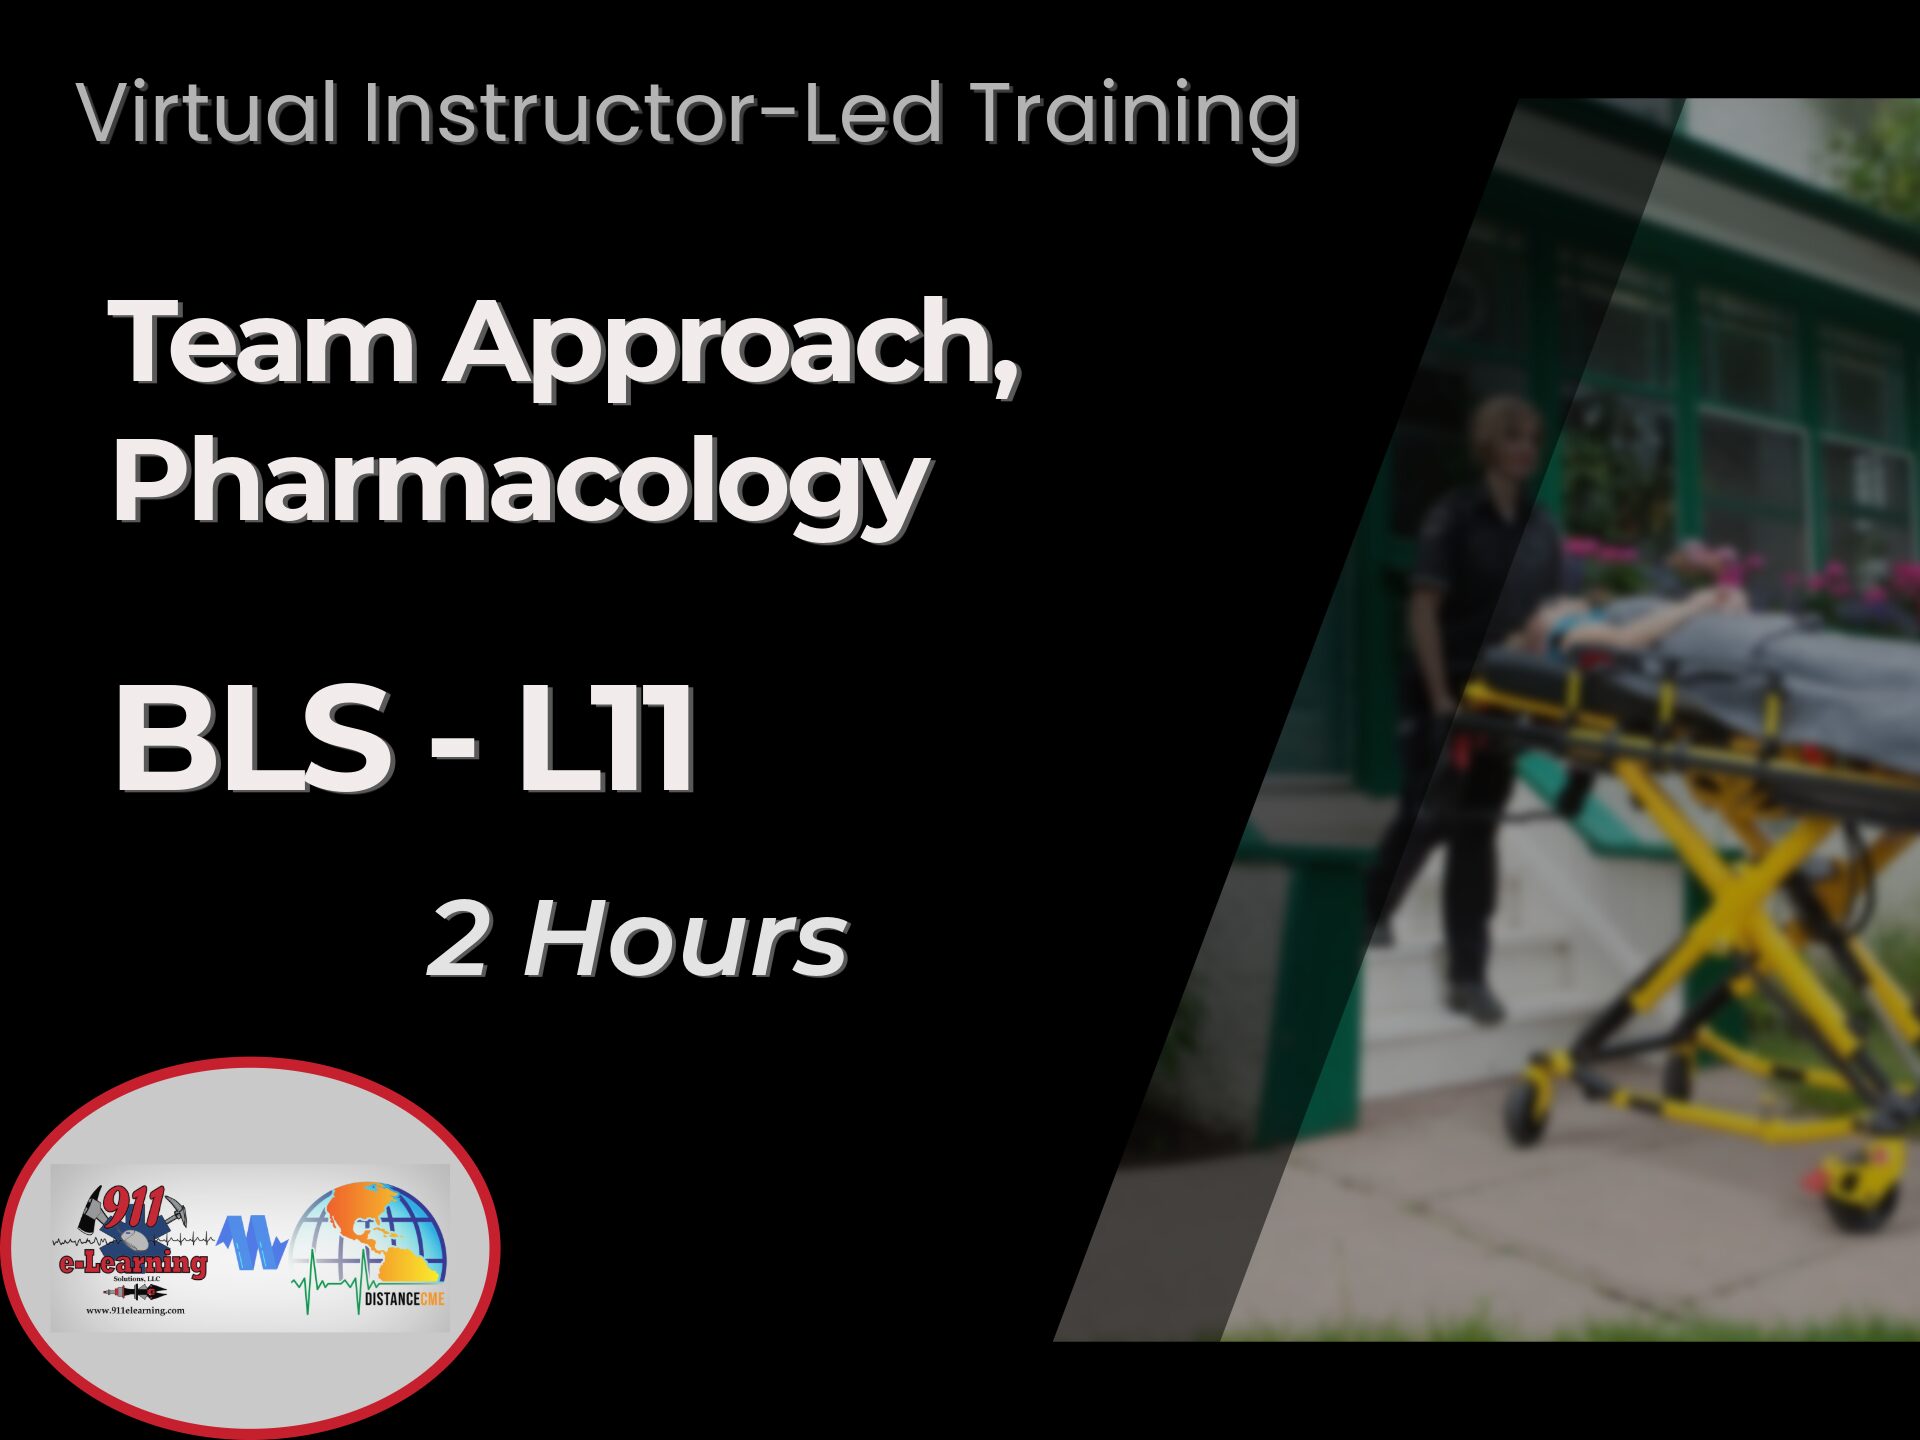 BLS L11 - VILT | 911 e-Learning Solutions LLC